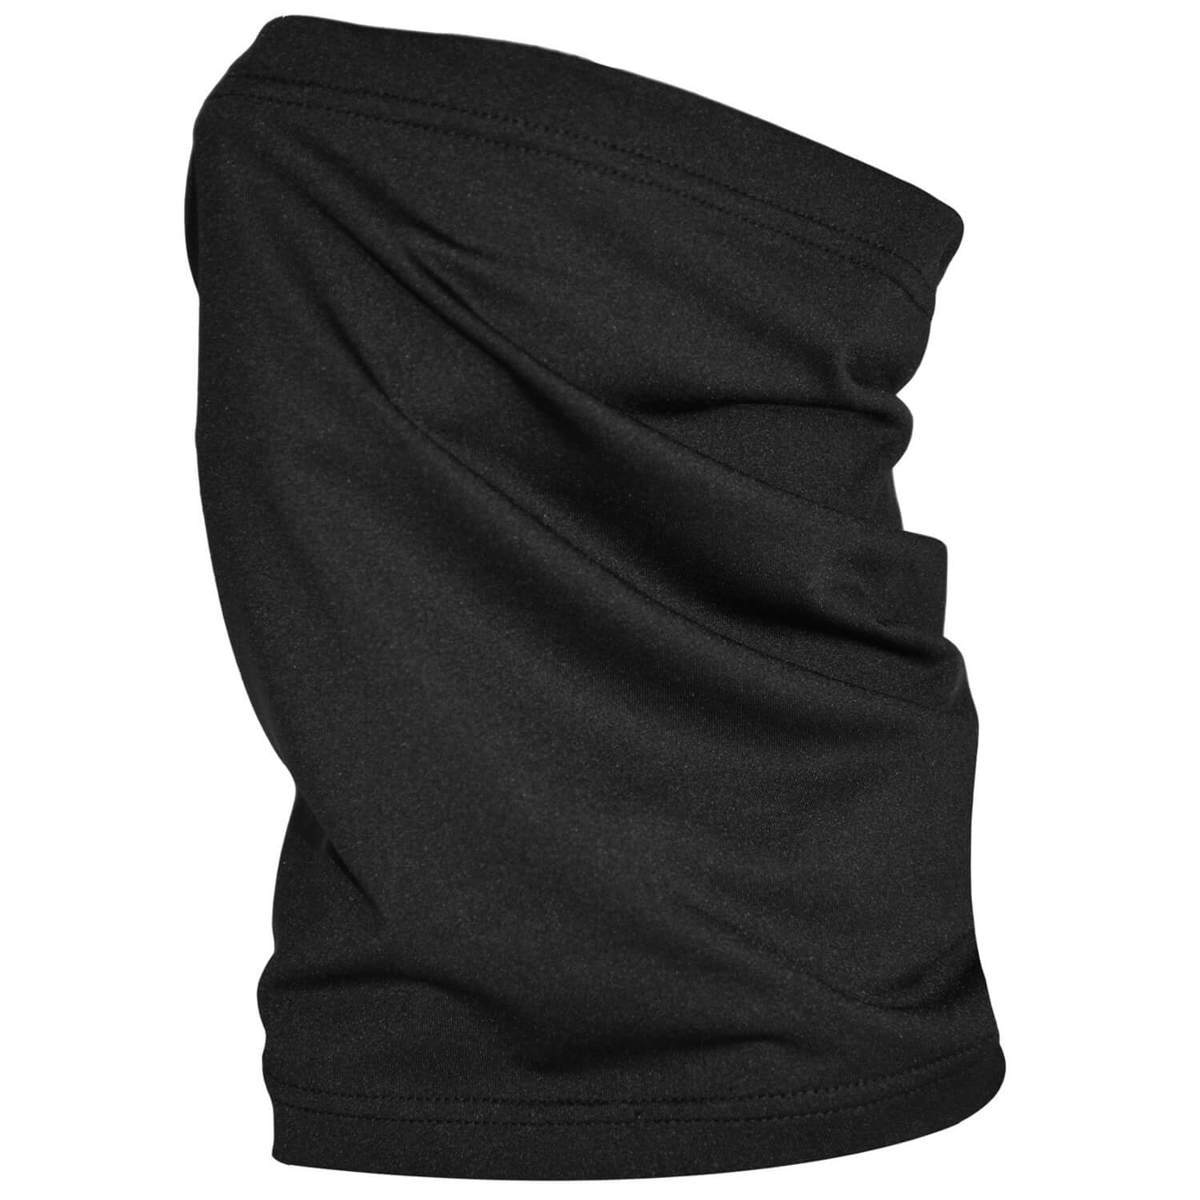 Igloos Men's Stretch Neck Gaiter - Black - One Size Fits Most - Black ...